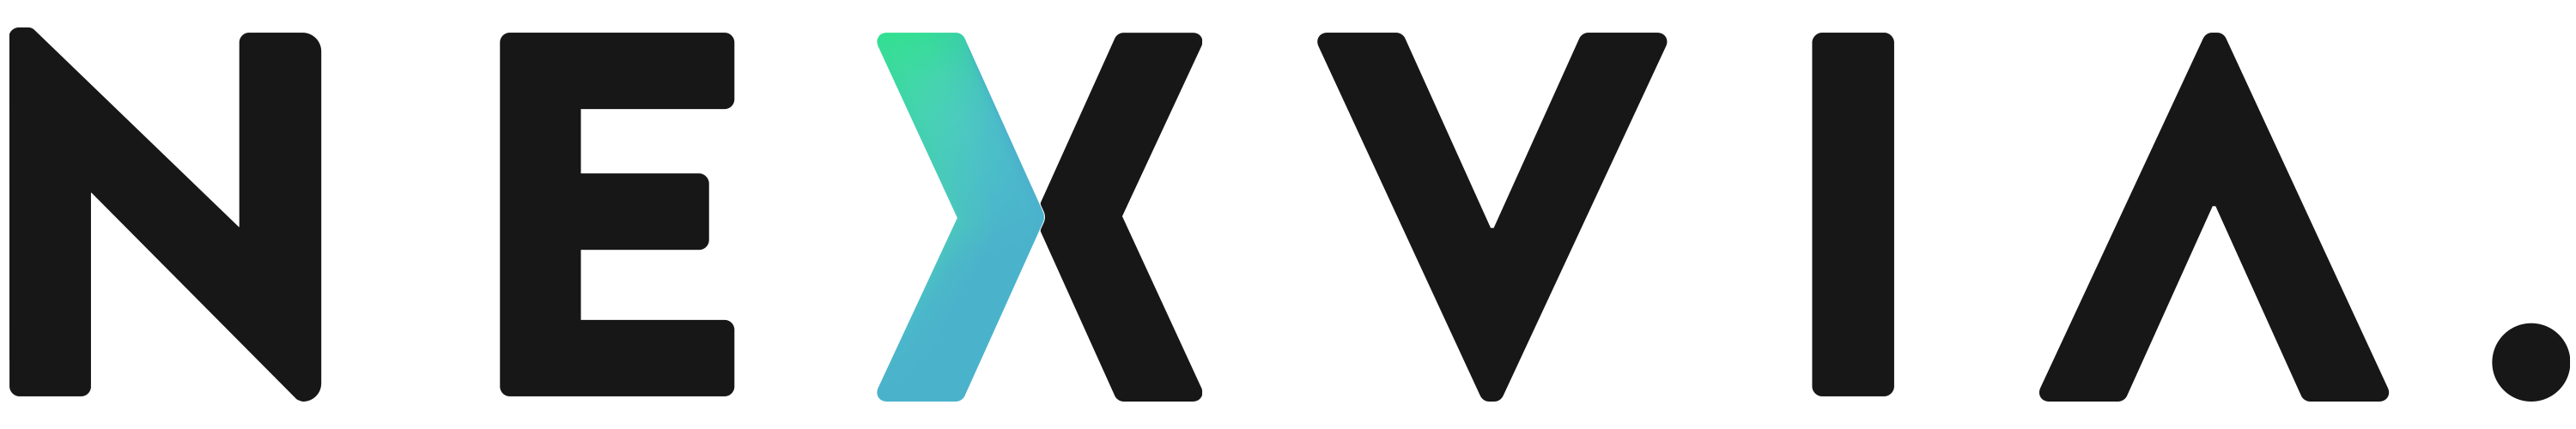 Nexvia Logo Transperent Dark-1